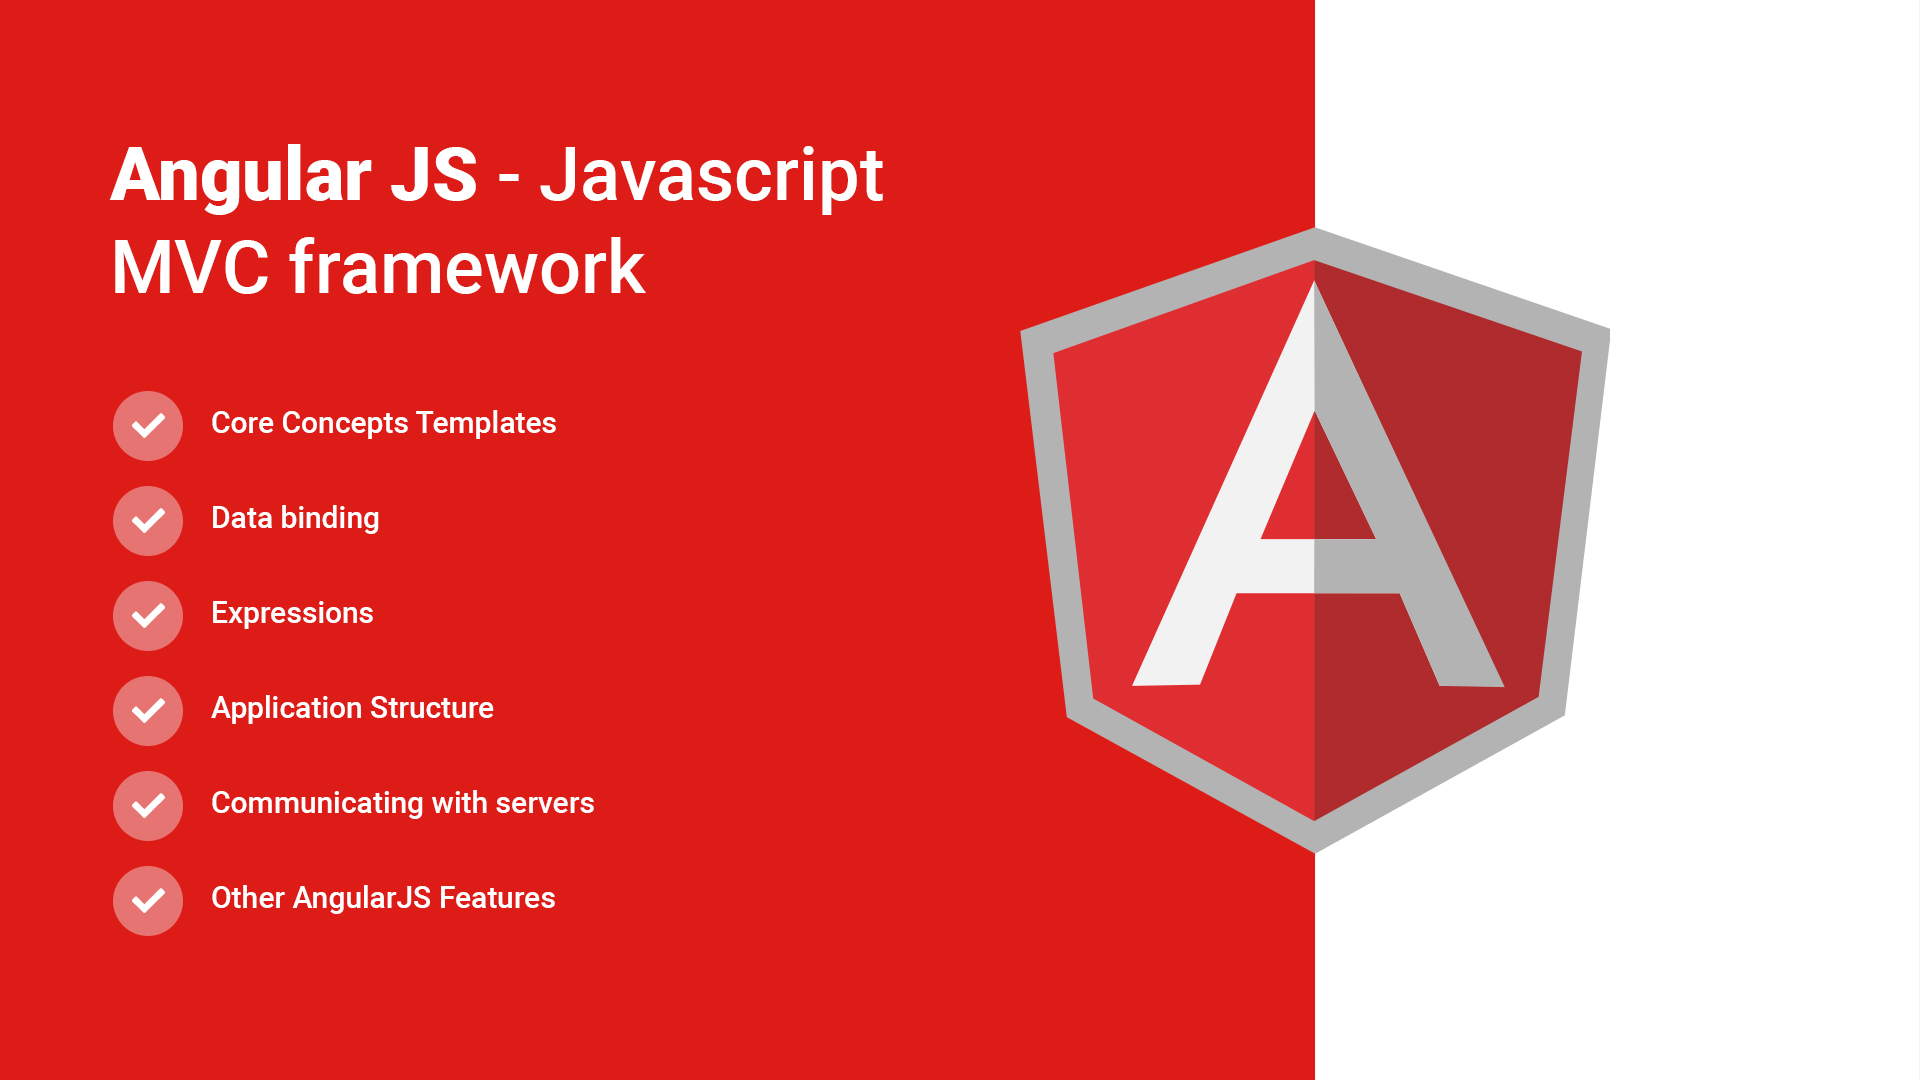 Angular JS - Javascript MVC framework